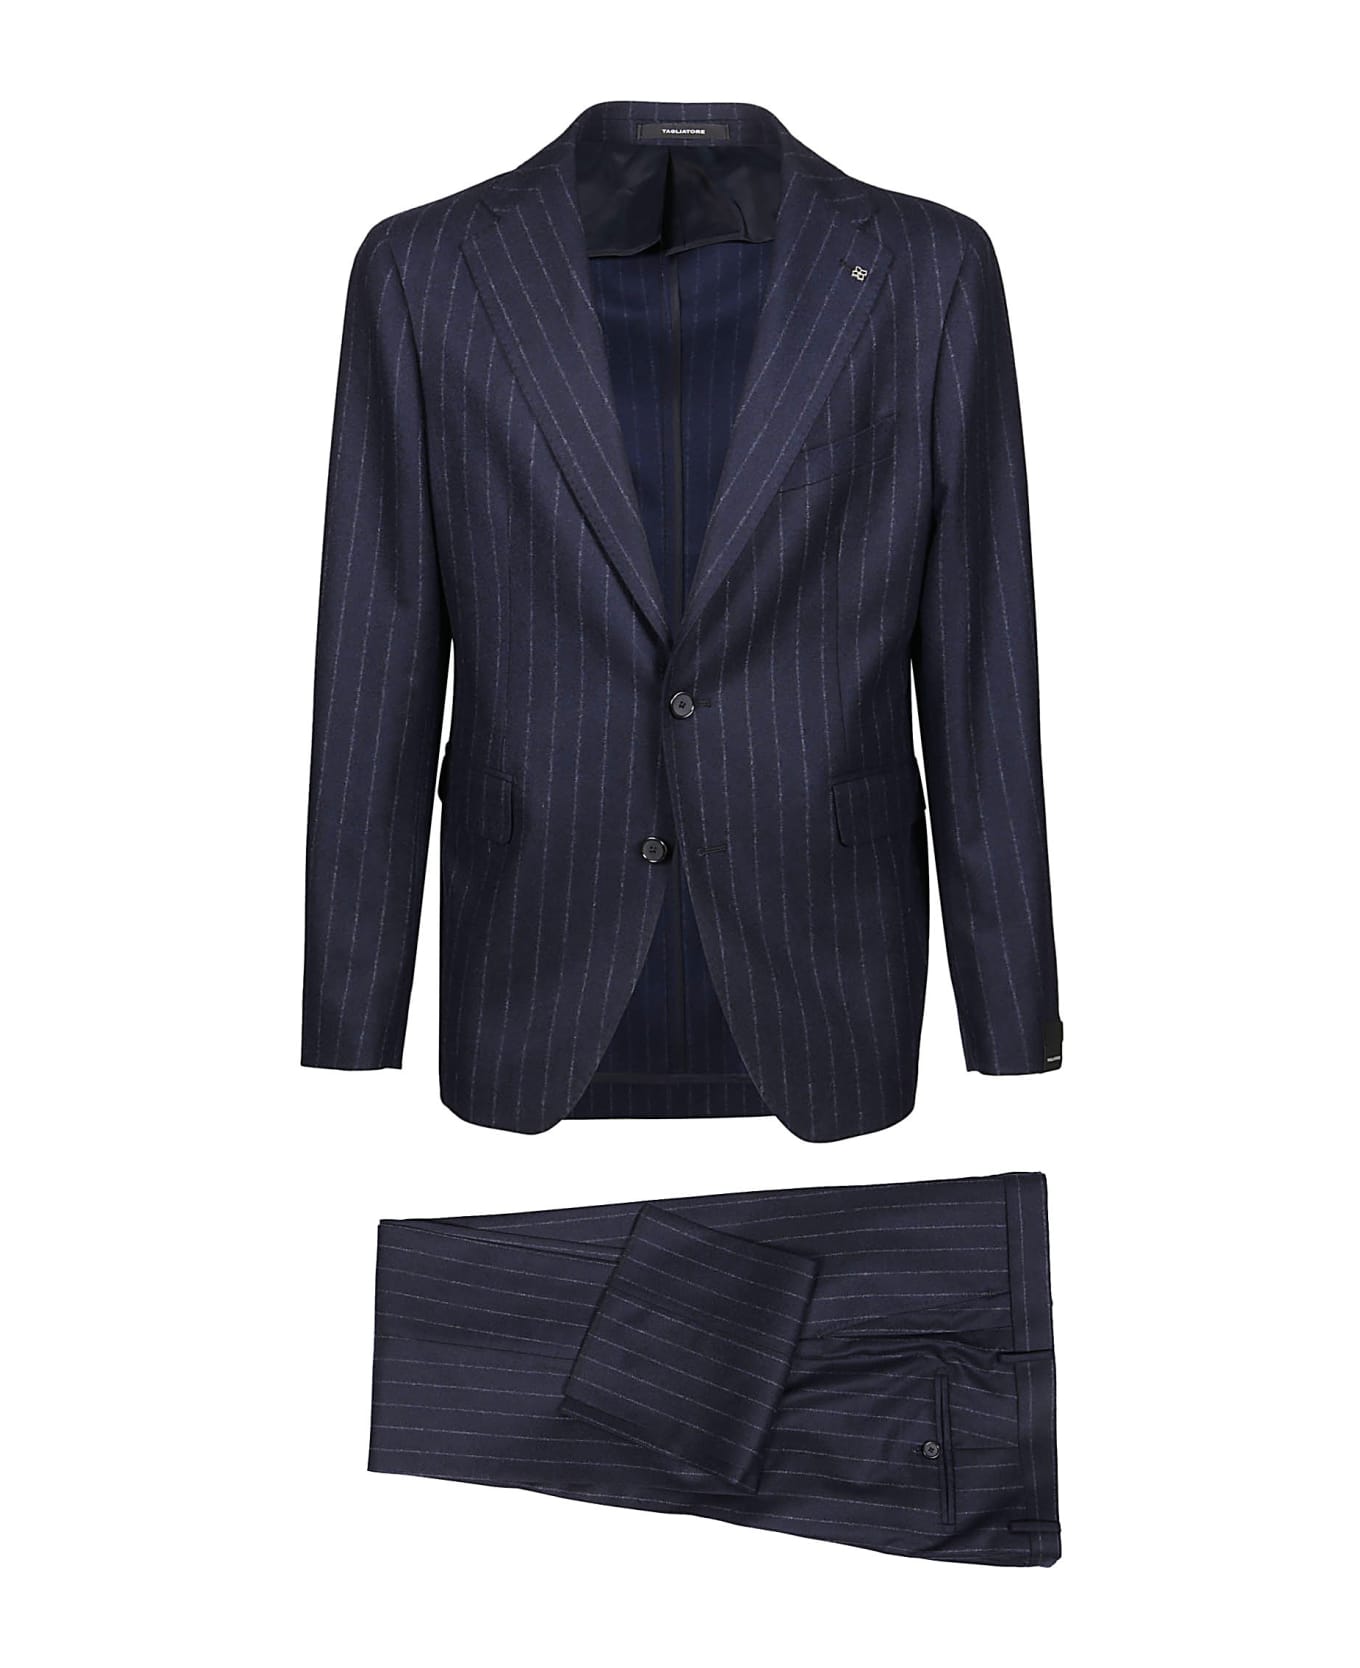 Tagliatore Suit - Blu